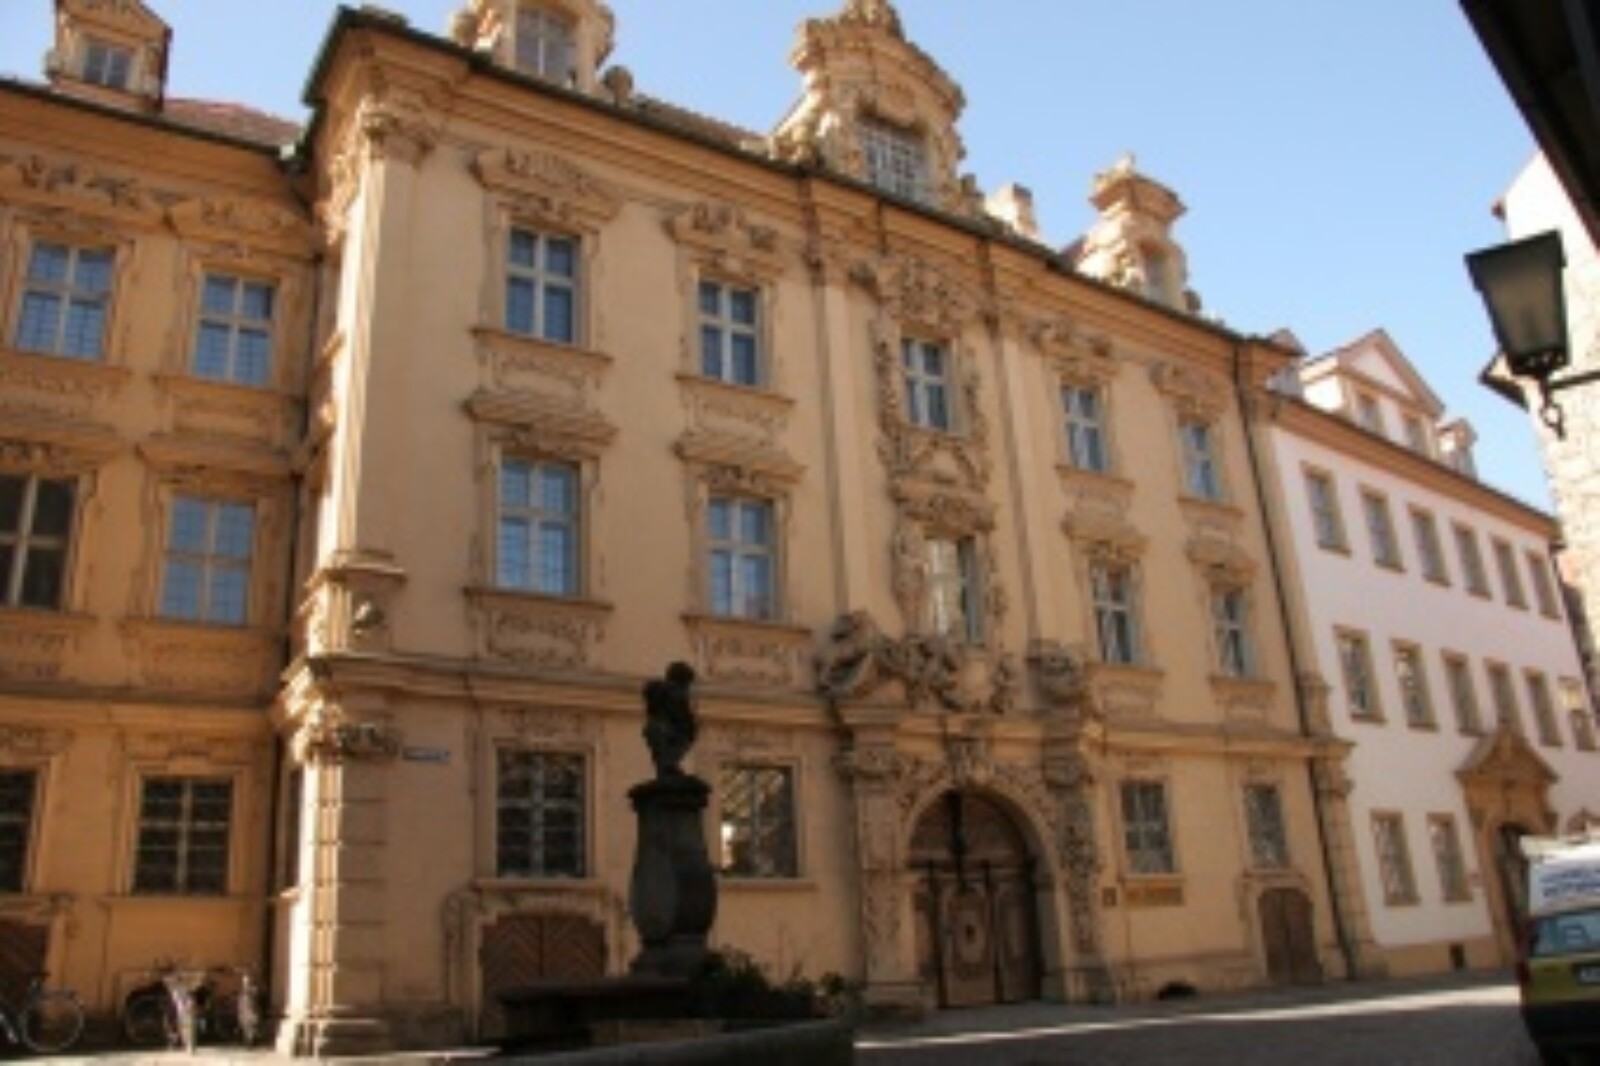 Böttingerhaus